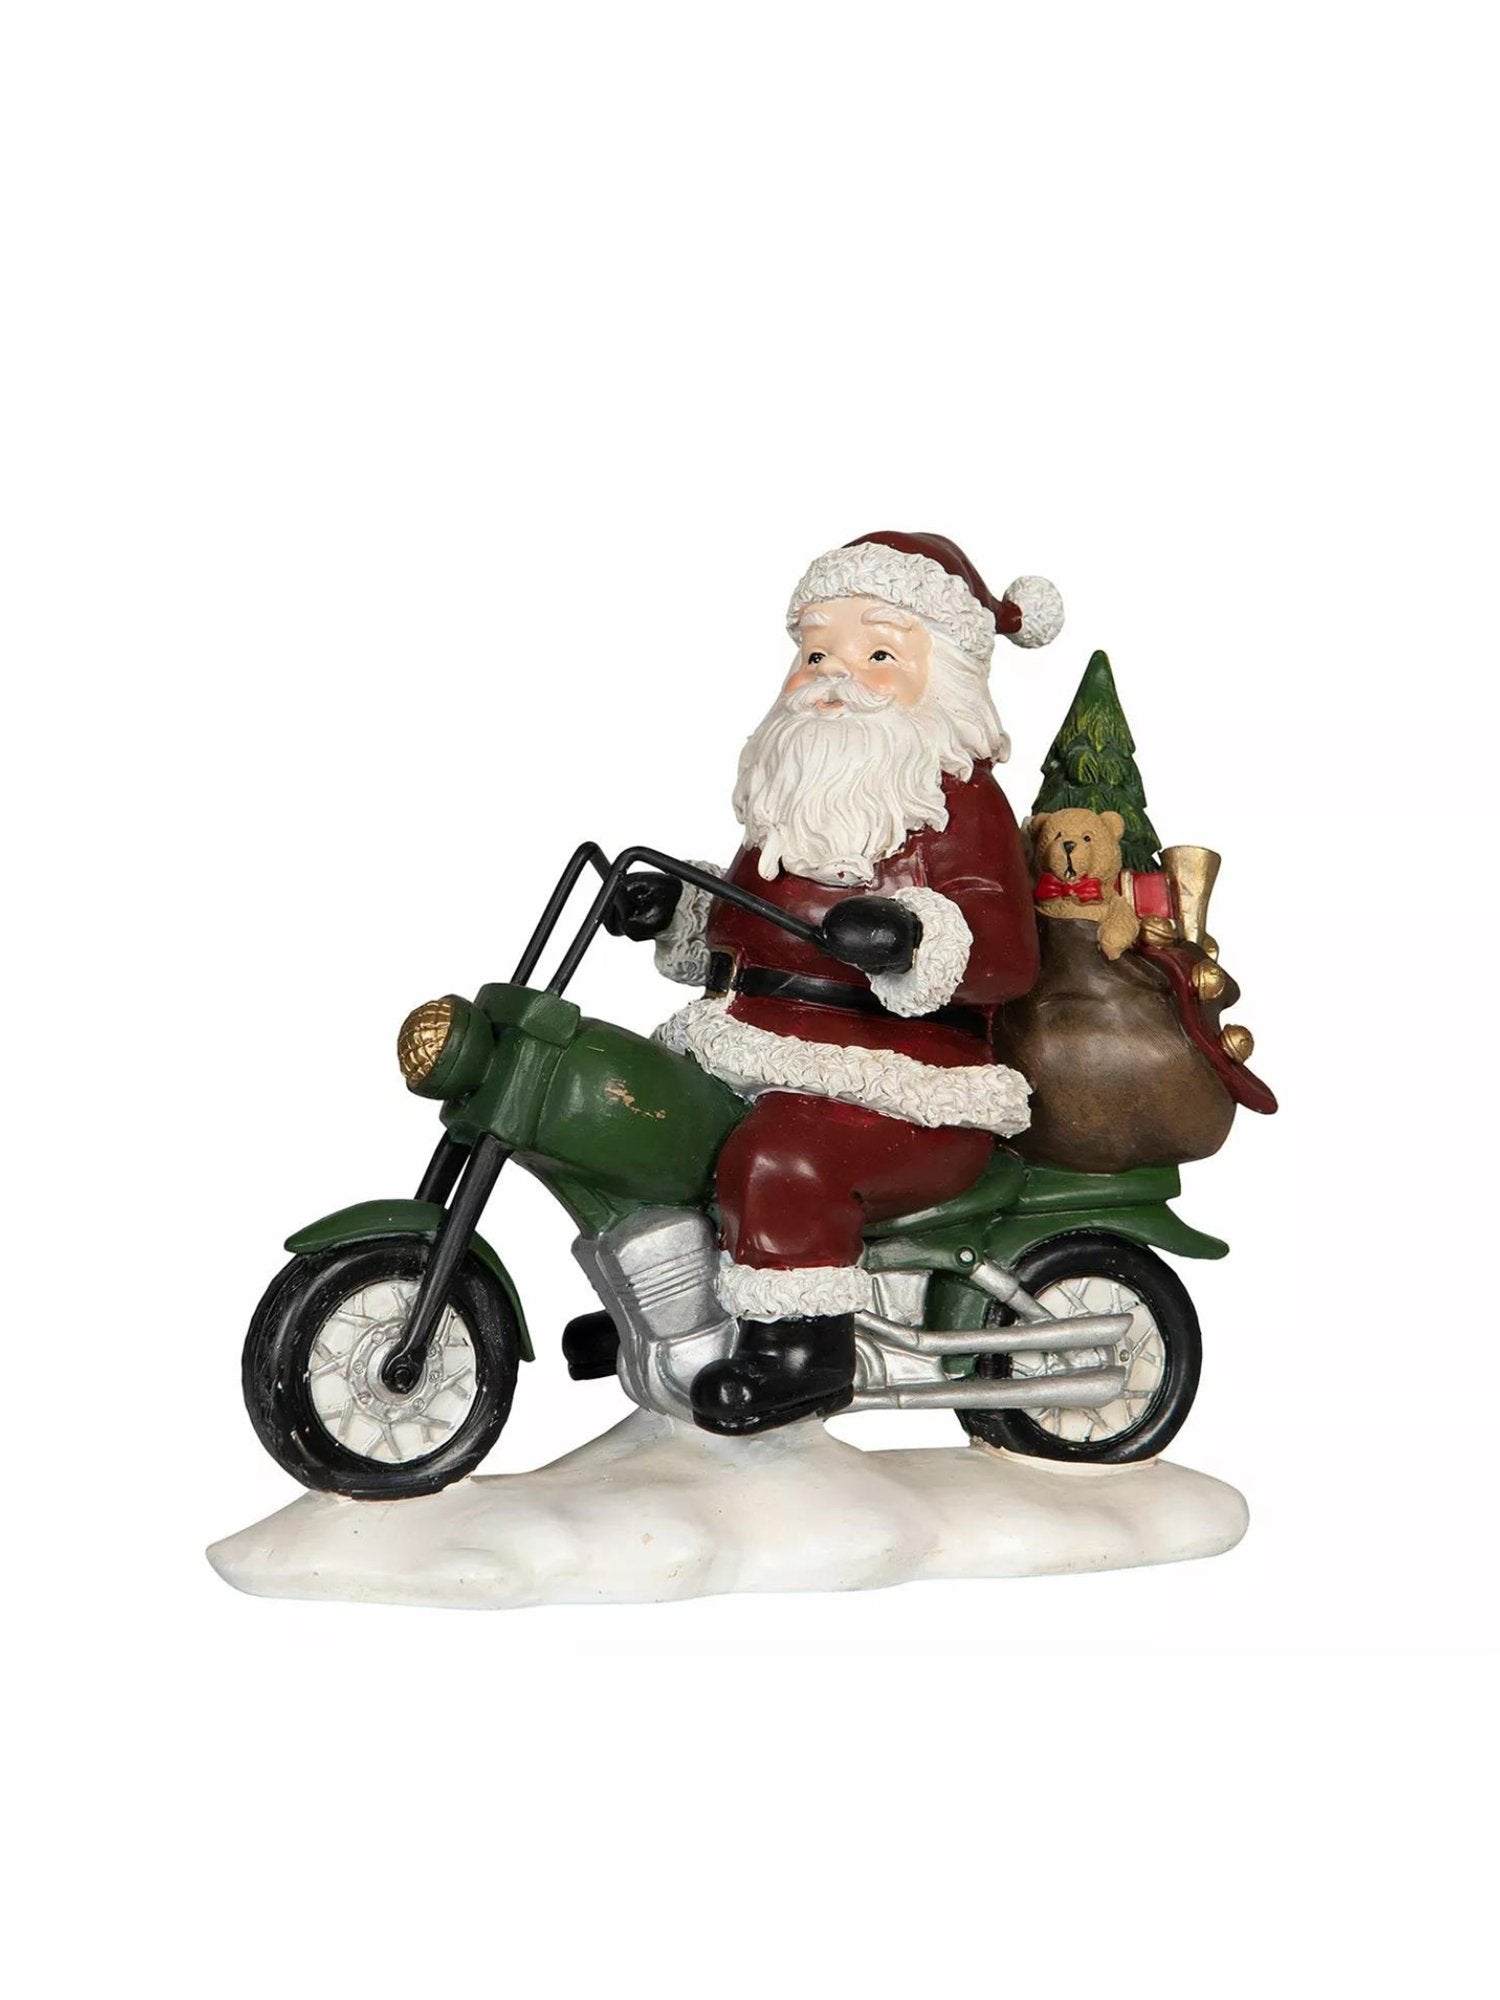 Julenisse På Moped - at home